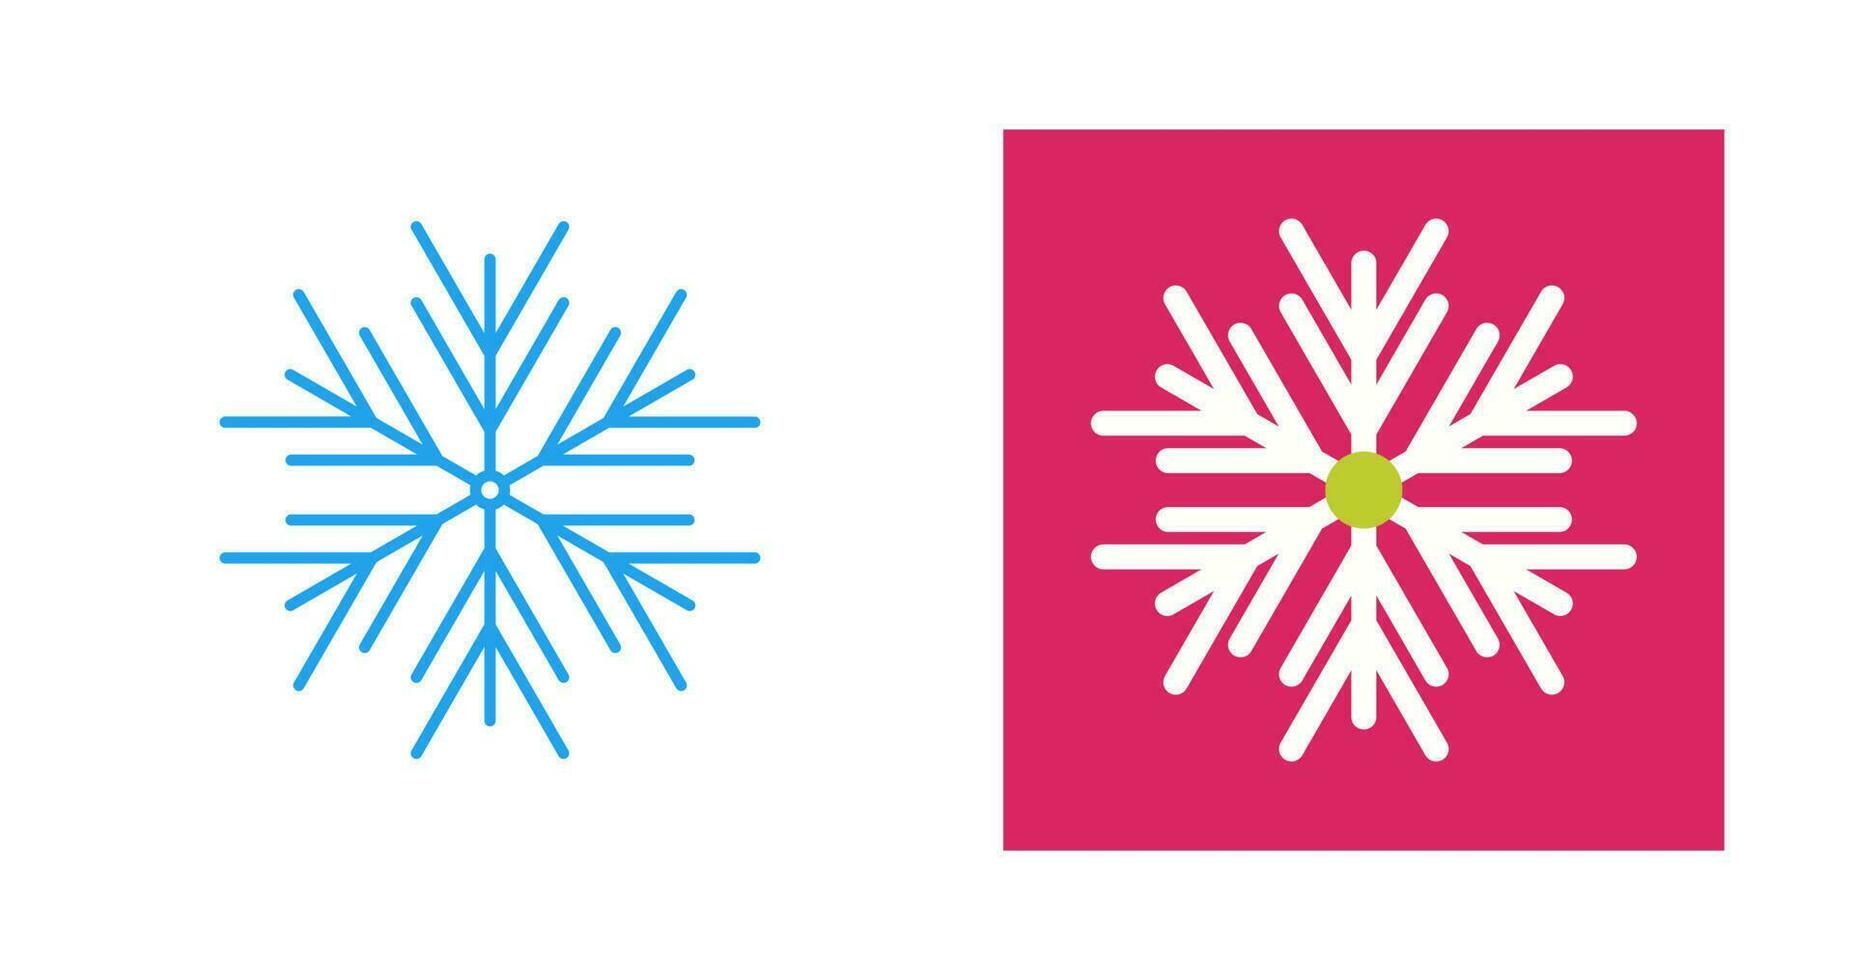 icône de vecteur de flocon de neige